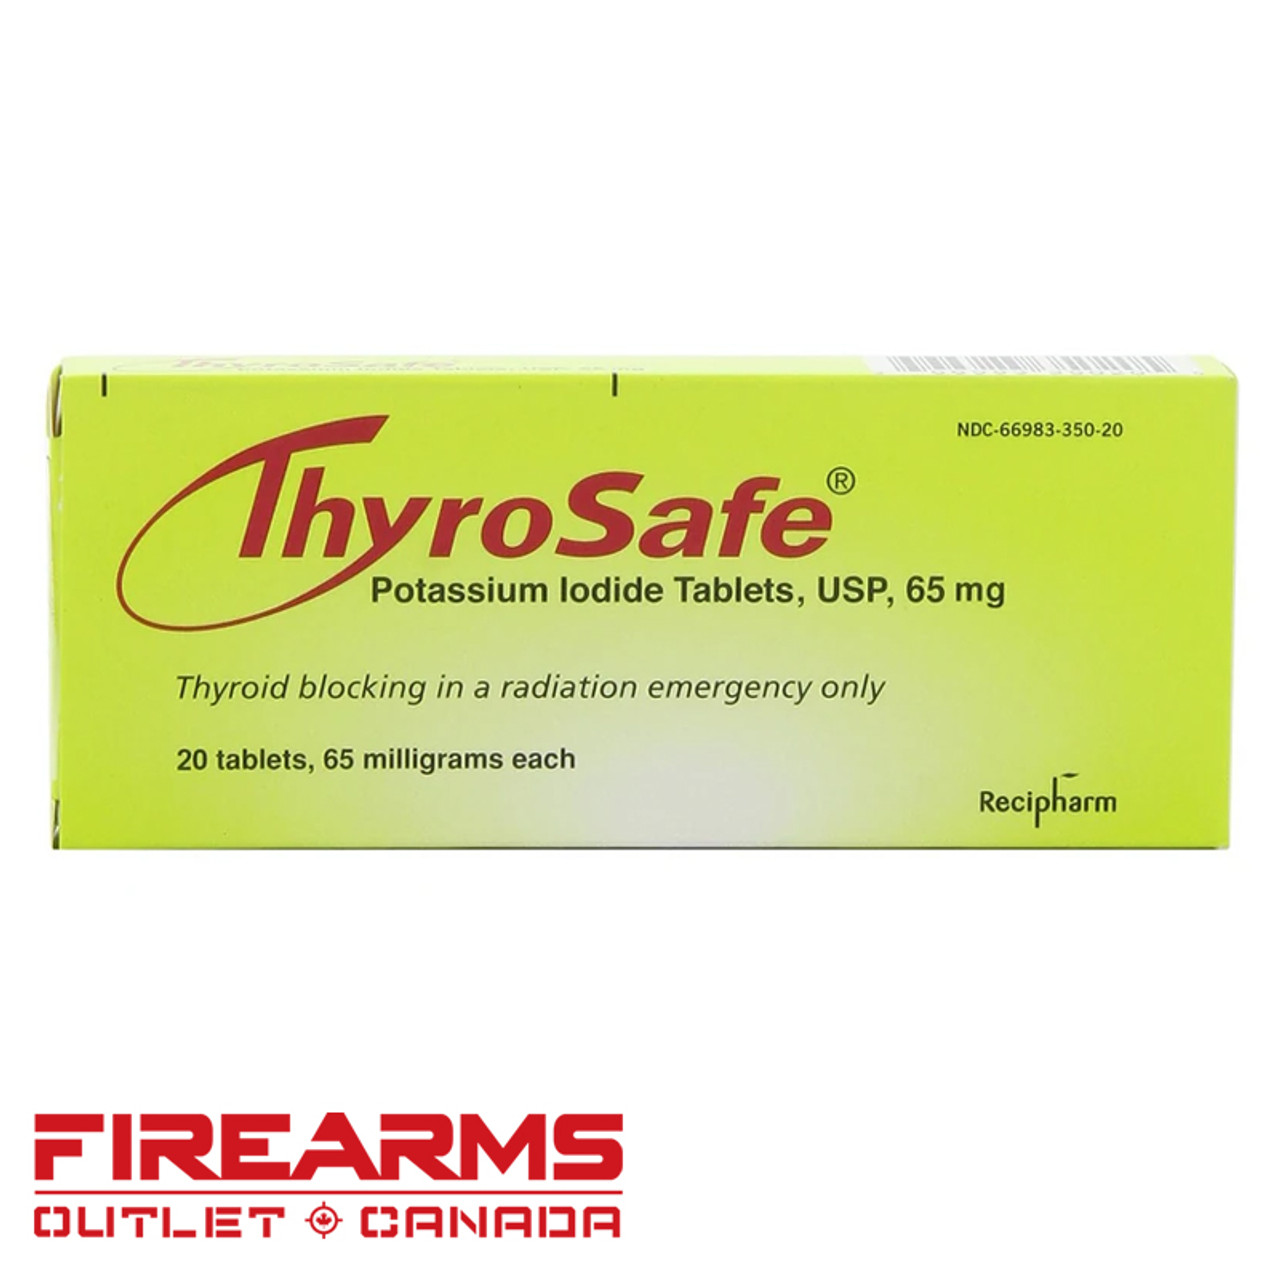 Mira Safety Thyrosafe Potassium Iodide Tablets (FDA Approved) [THYROSAFE]